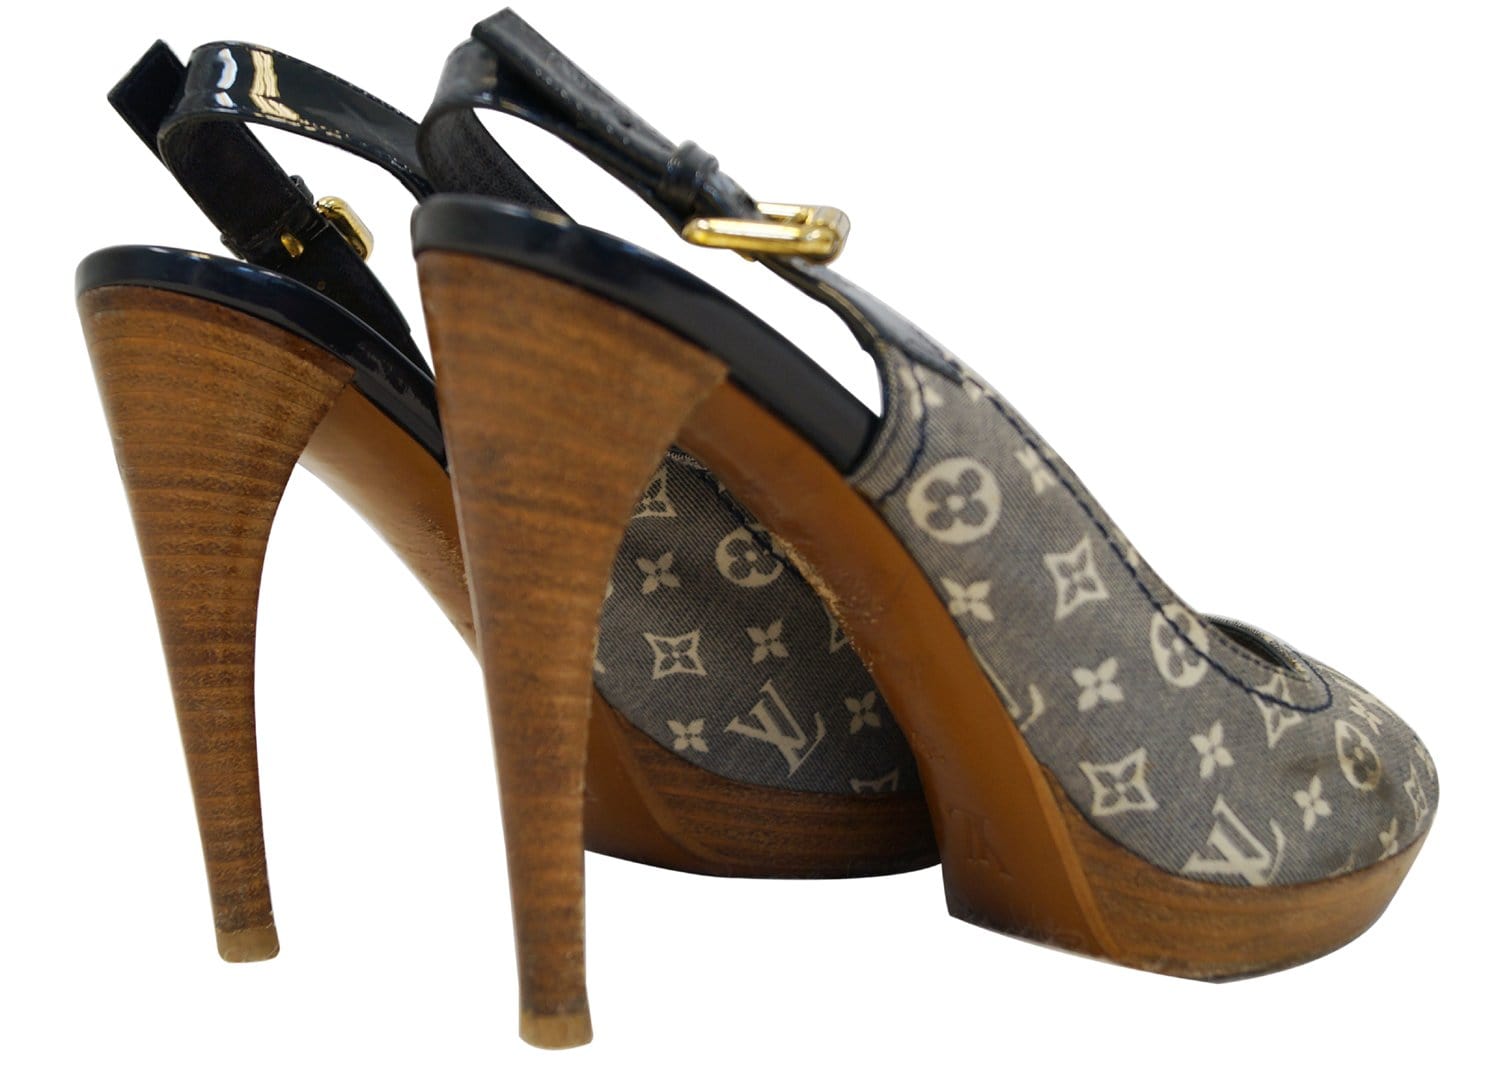 Louis Vuitton Women's Stiletto Heels for sale